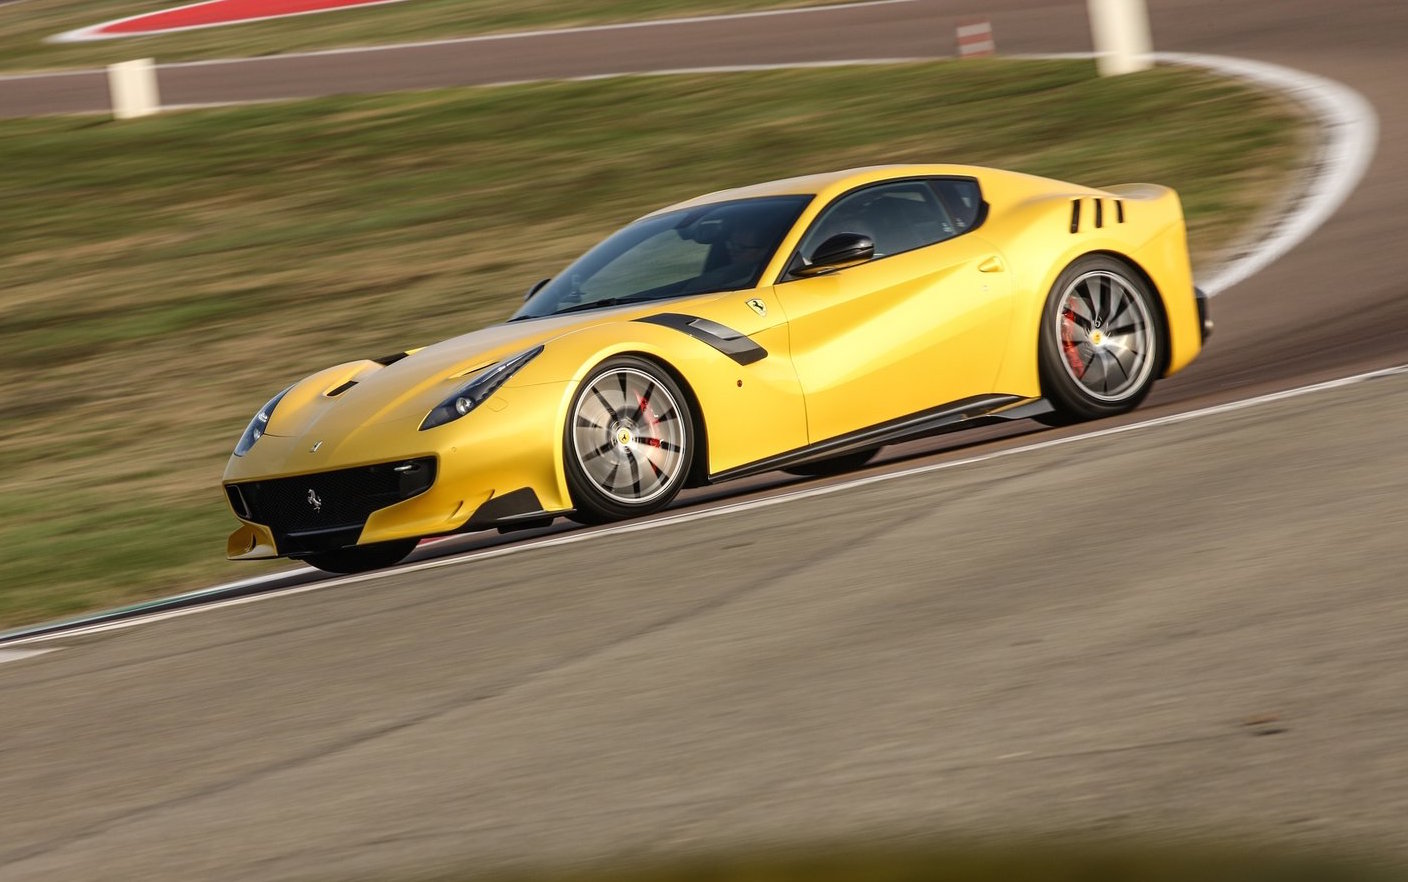 Ferrari V12 engines to remain non-turbo, hybrid instead – report